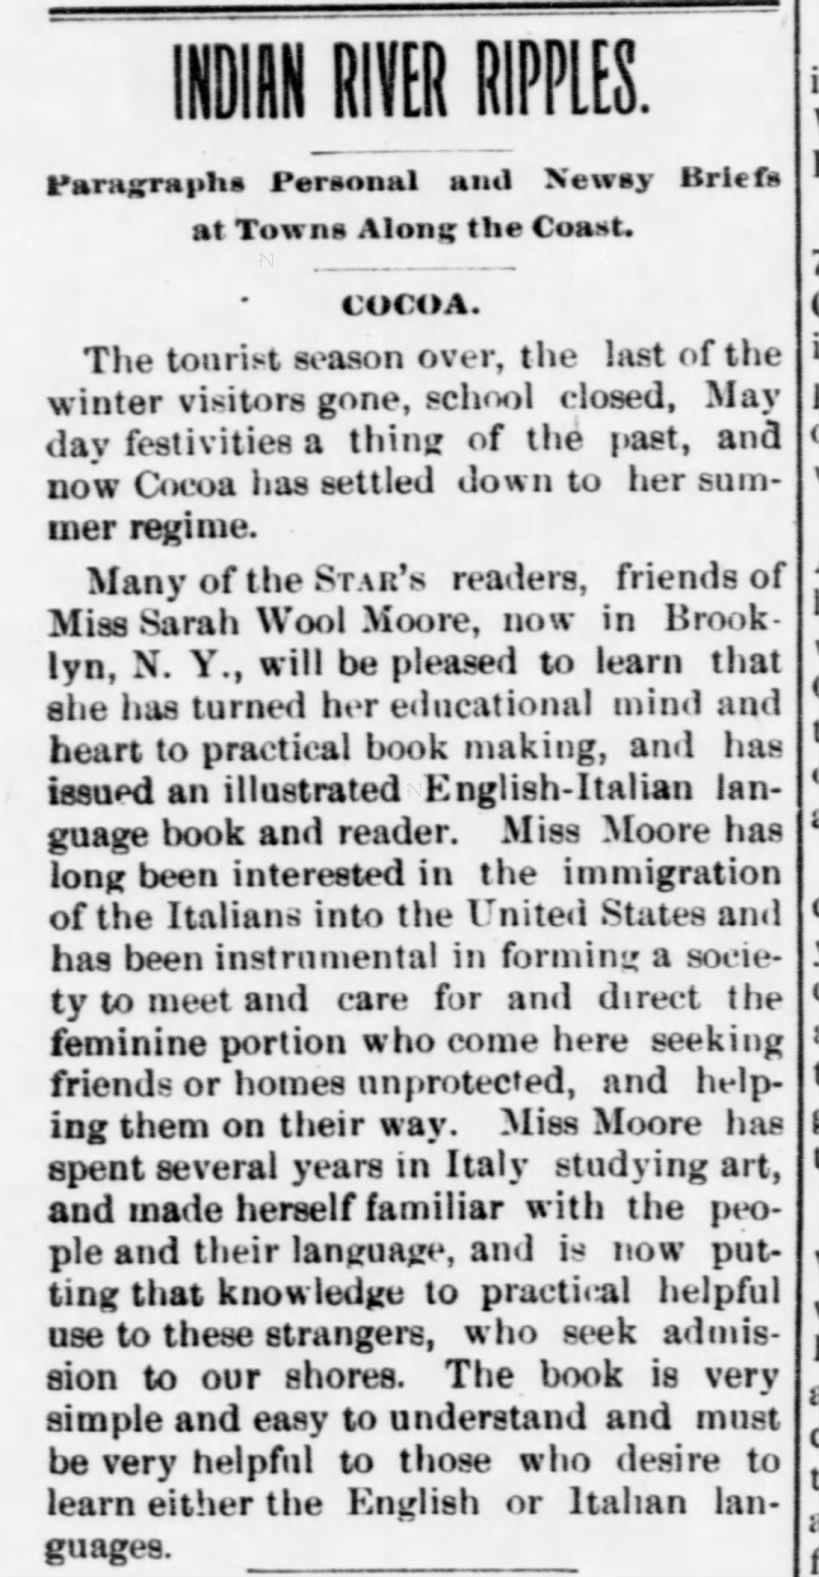 Indian River Ripples. The Florida Star. (Titusville, Florida) May 9, 1902, p 8